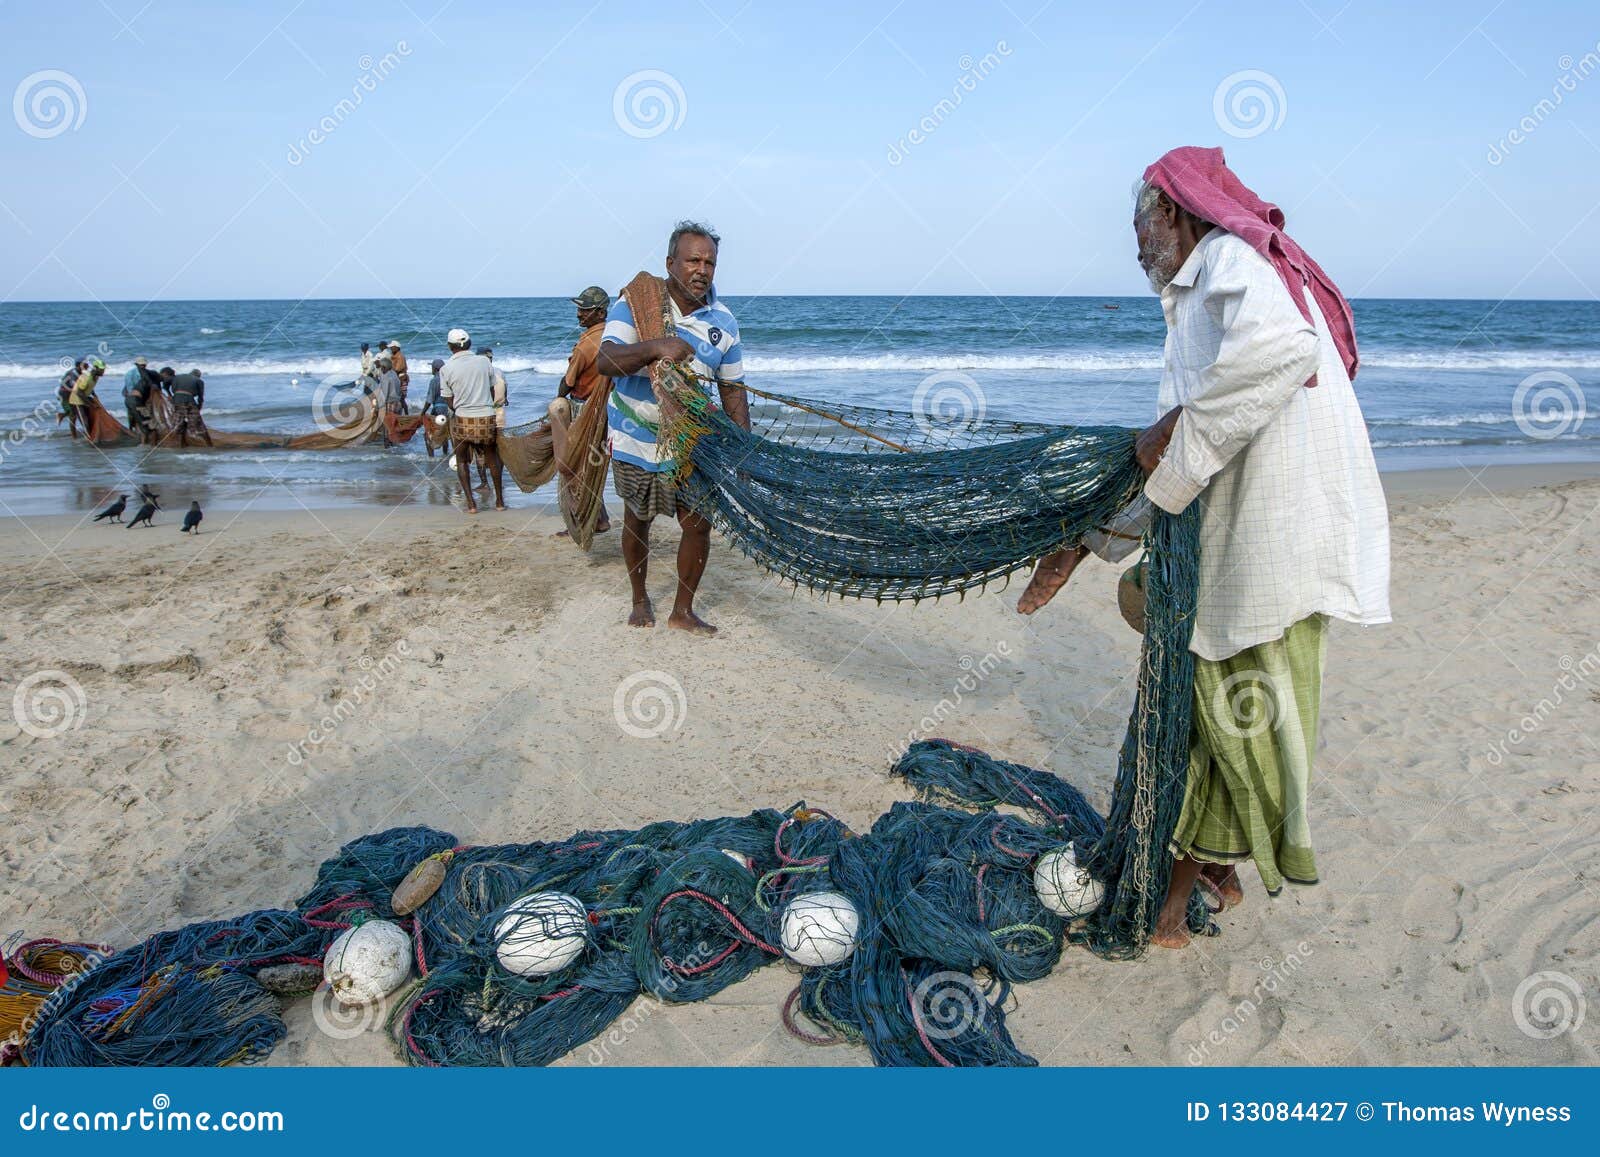 Fishermen Drag a Large Fishing Net Onto the Beach. Editorial